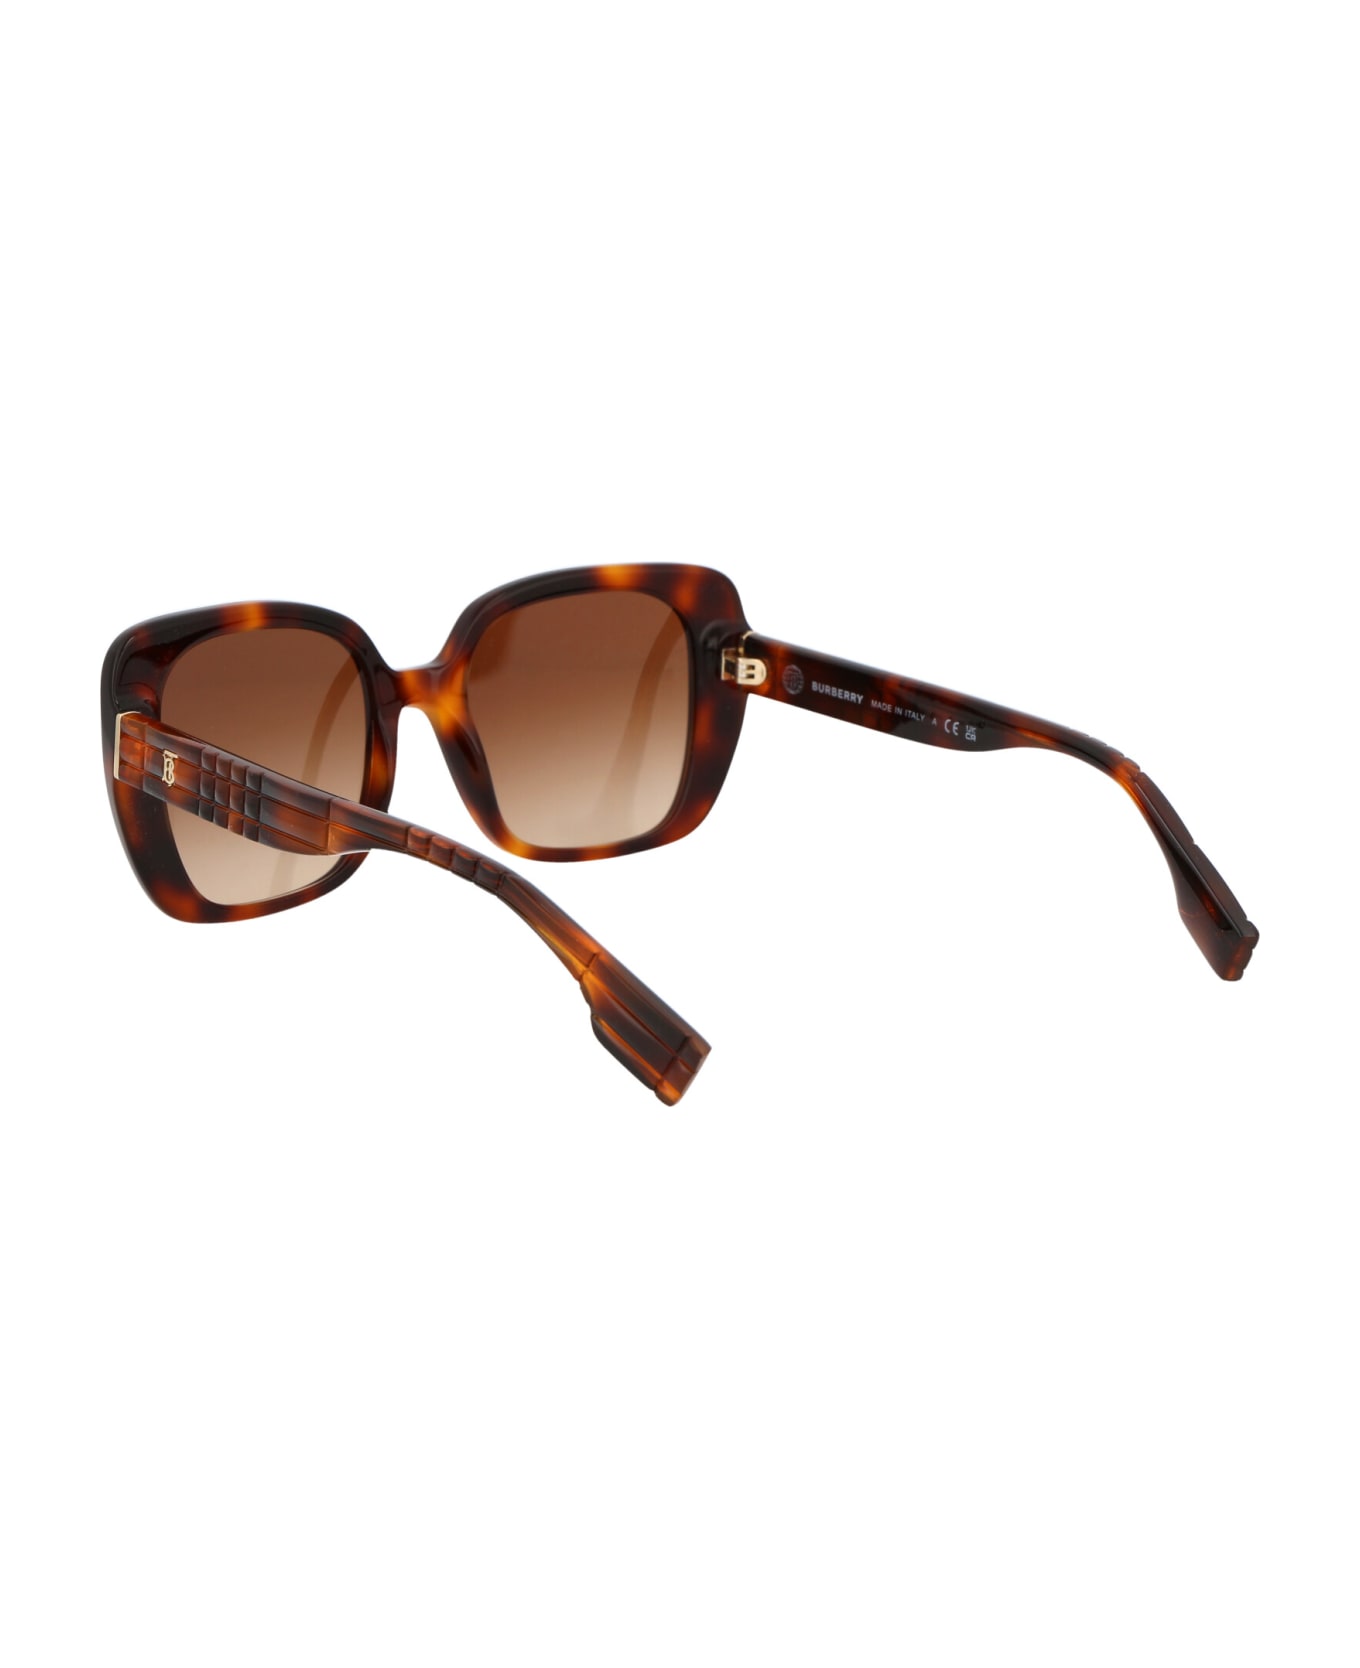 Burberry Eyewear Helena Sunglasses - 331613 LIGHT HAVANA